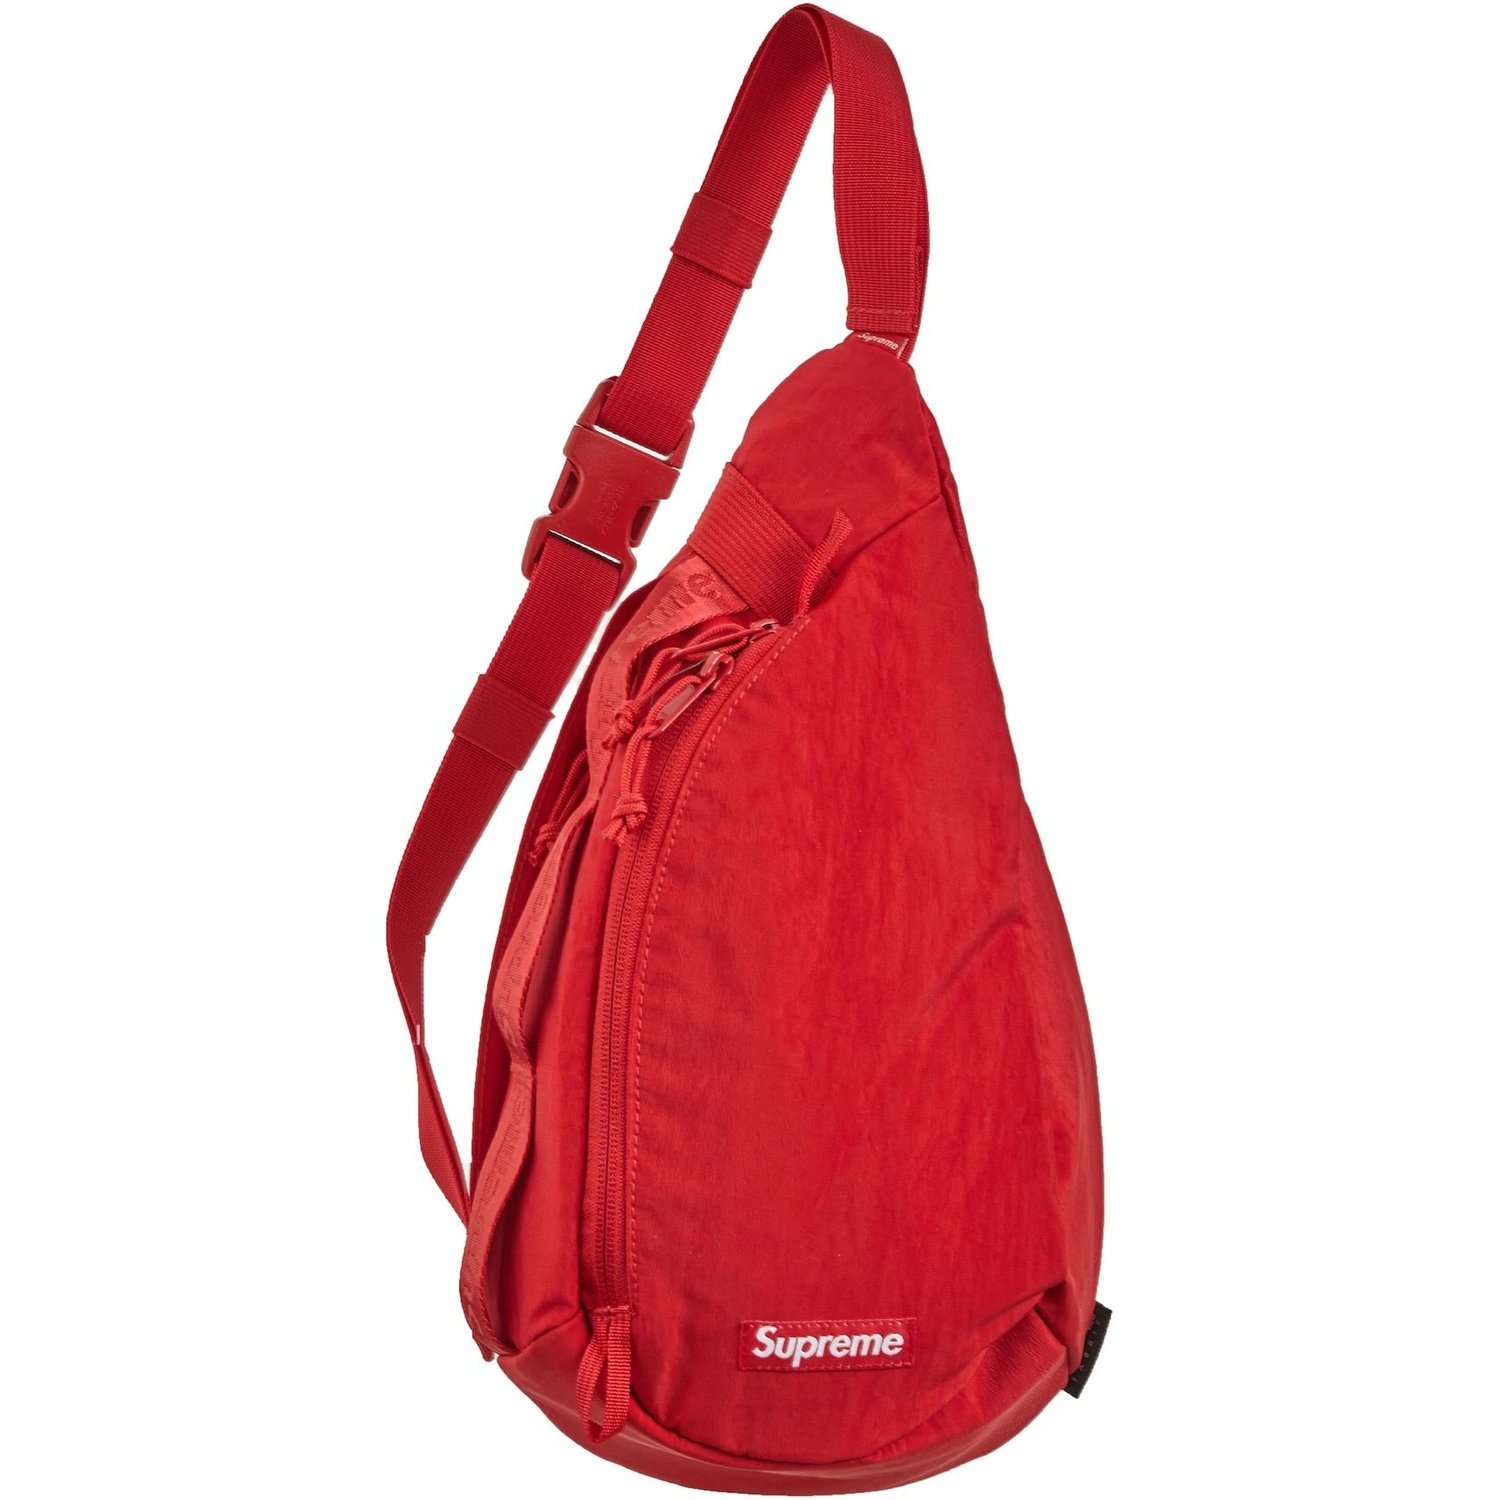 Buy Supreme Leather Women's Sling Bag (Red,Medium, SP10_Medium) at